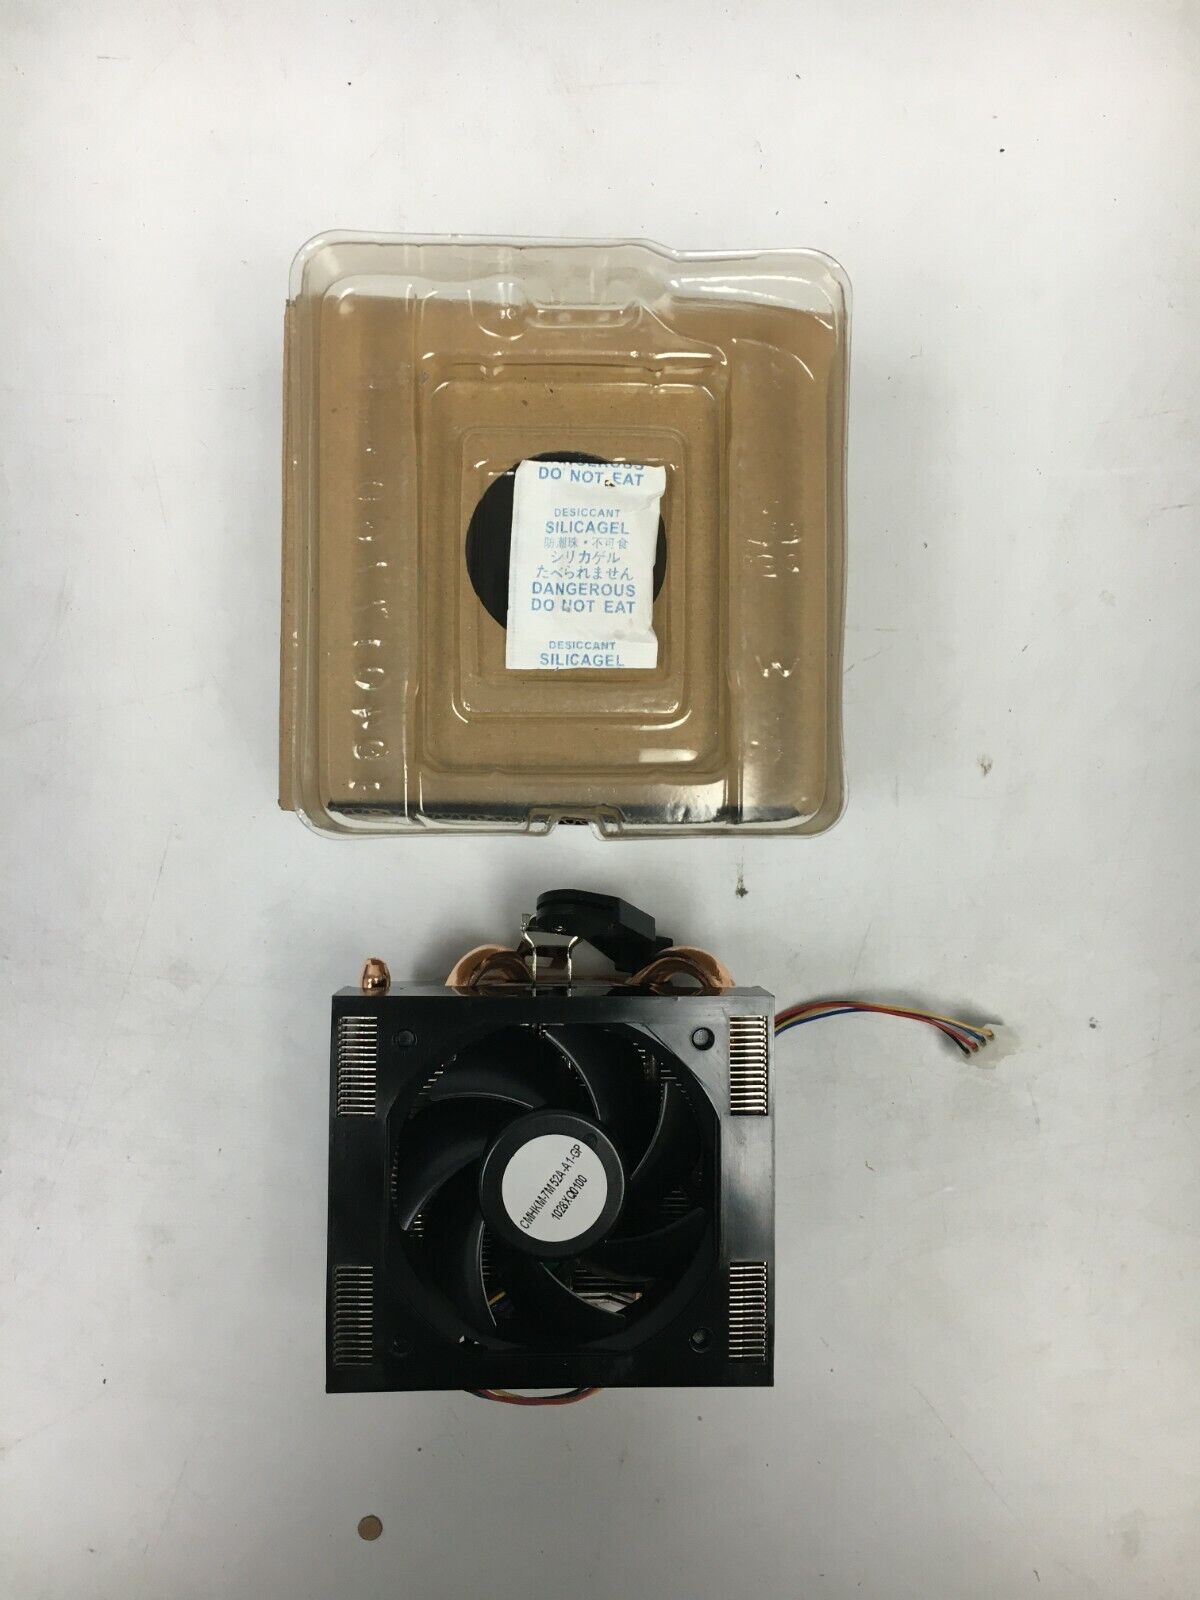 AMD Original CPU Fan Heat Sink for Socket AM2 AM3 Processors